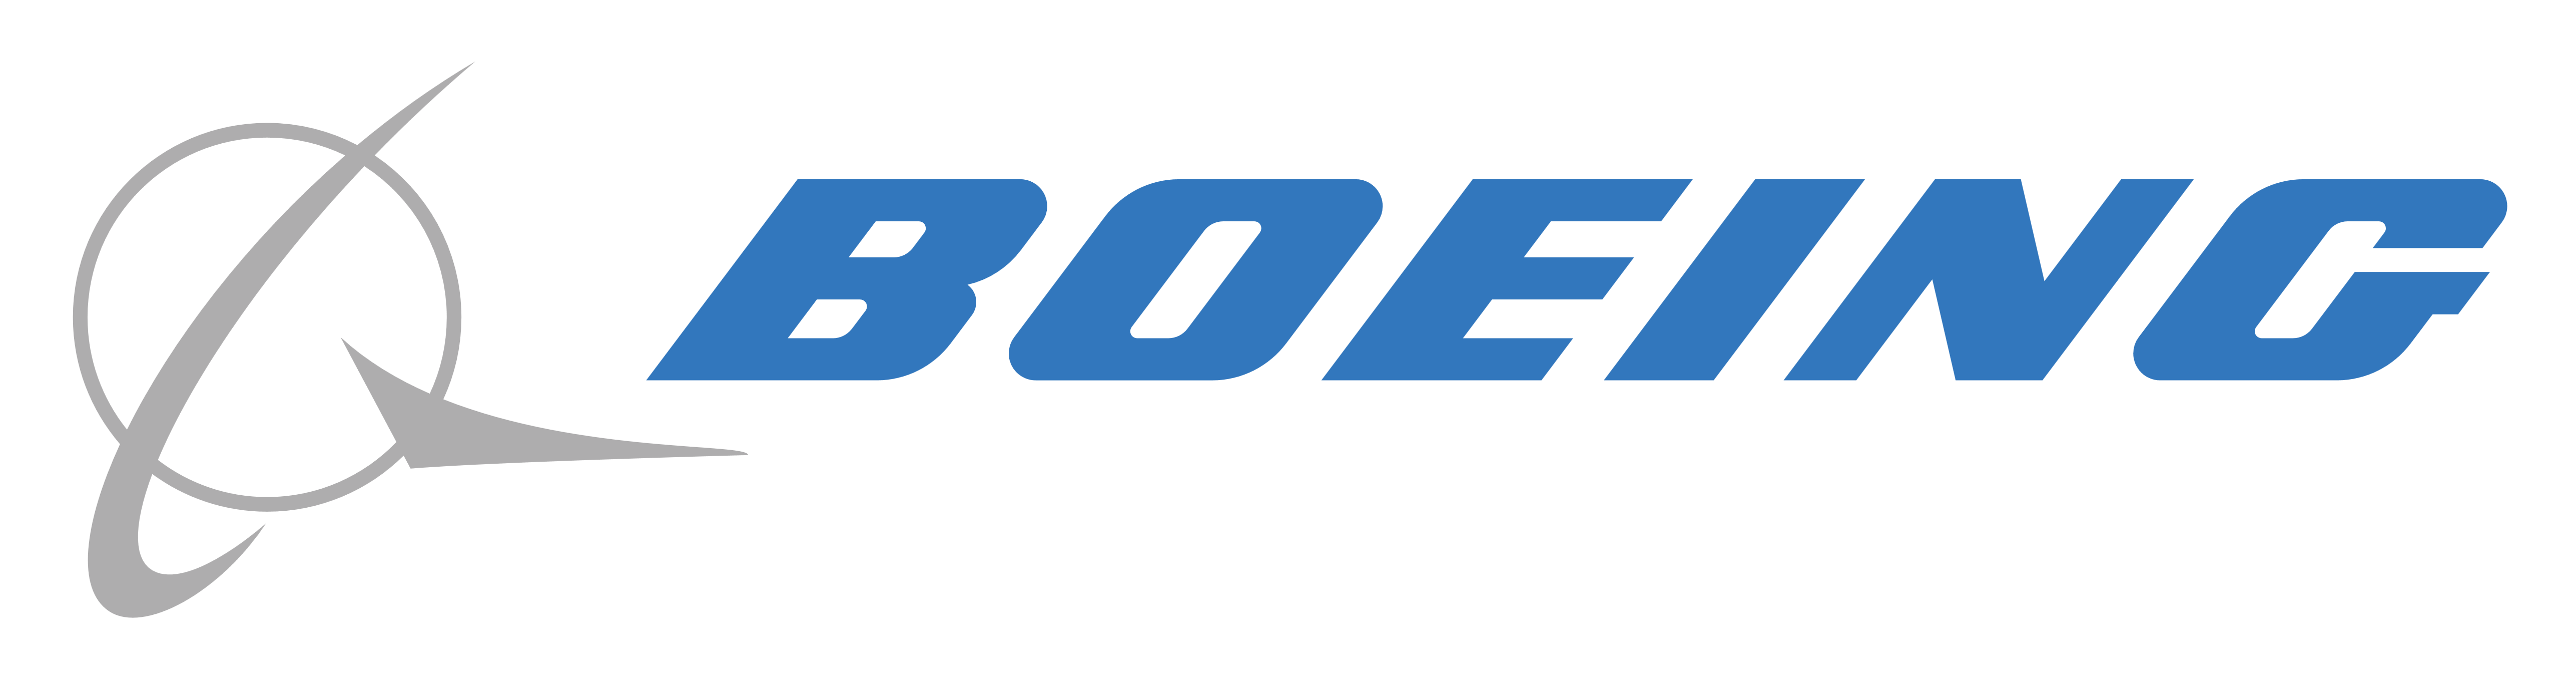 Boeing Logo - Boeing Logo Evo